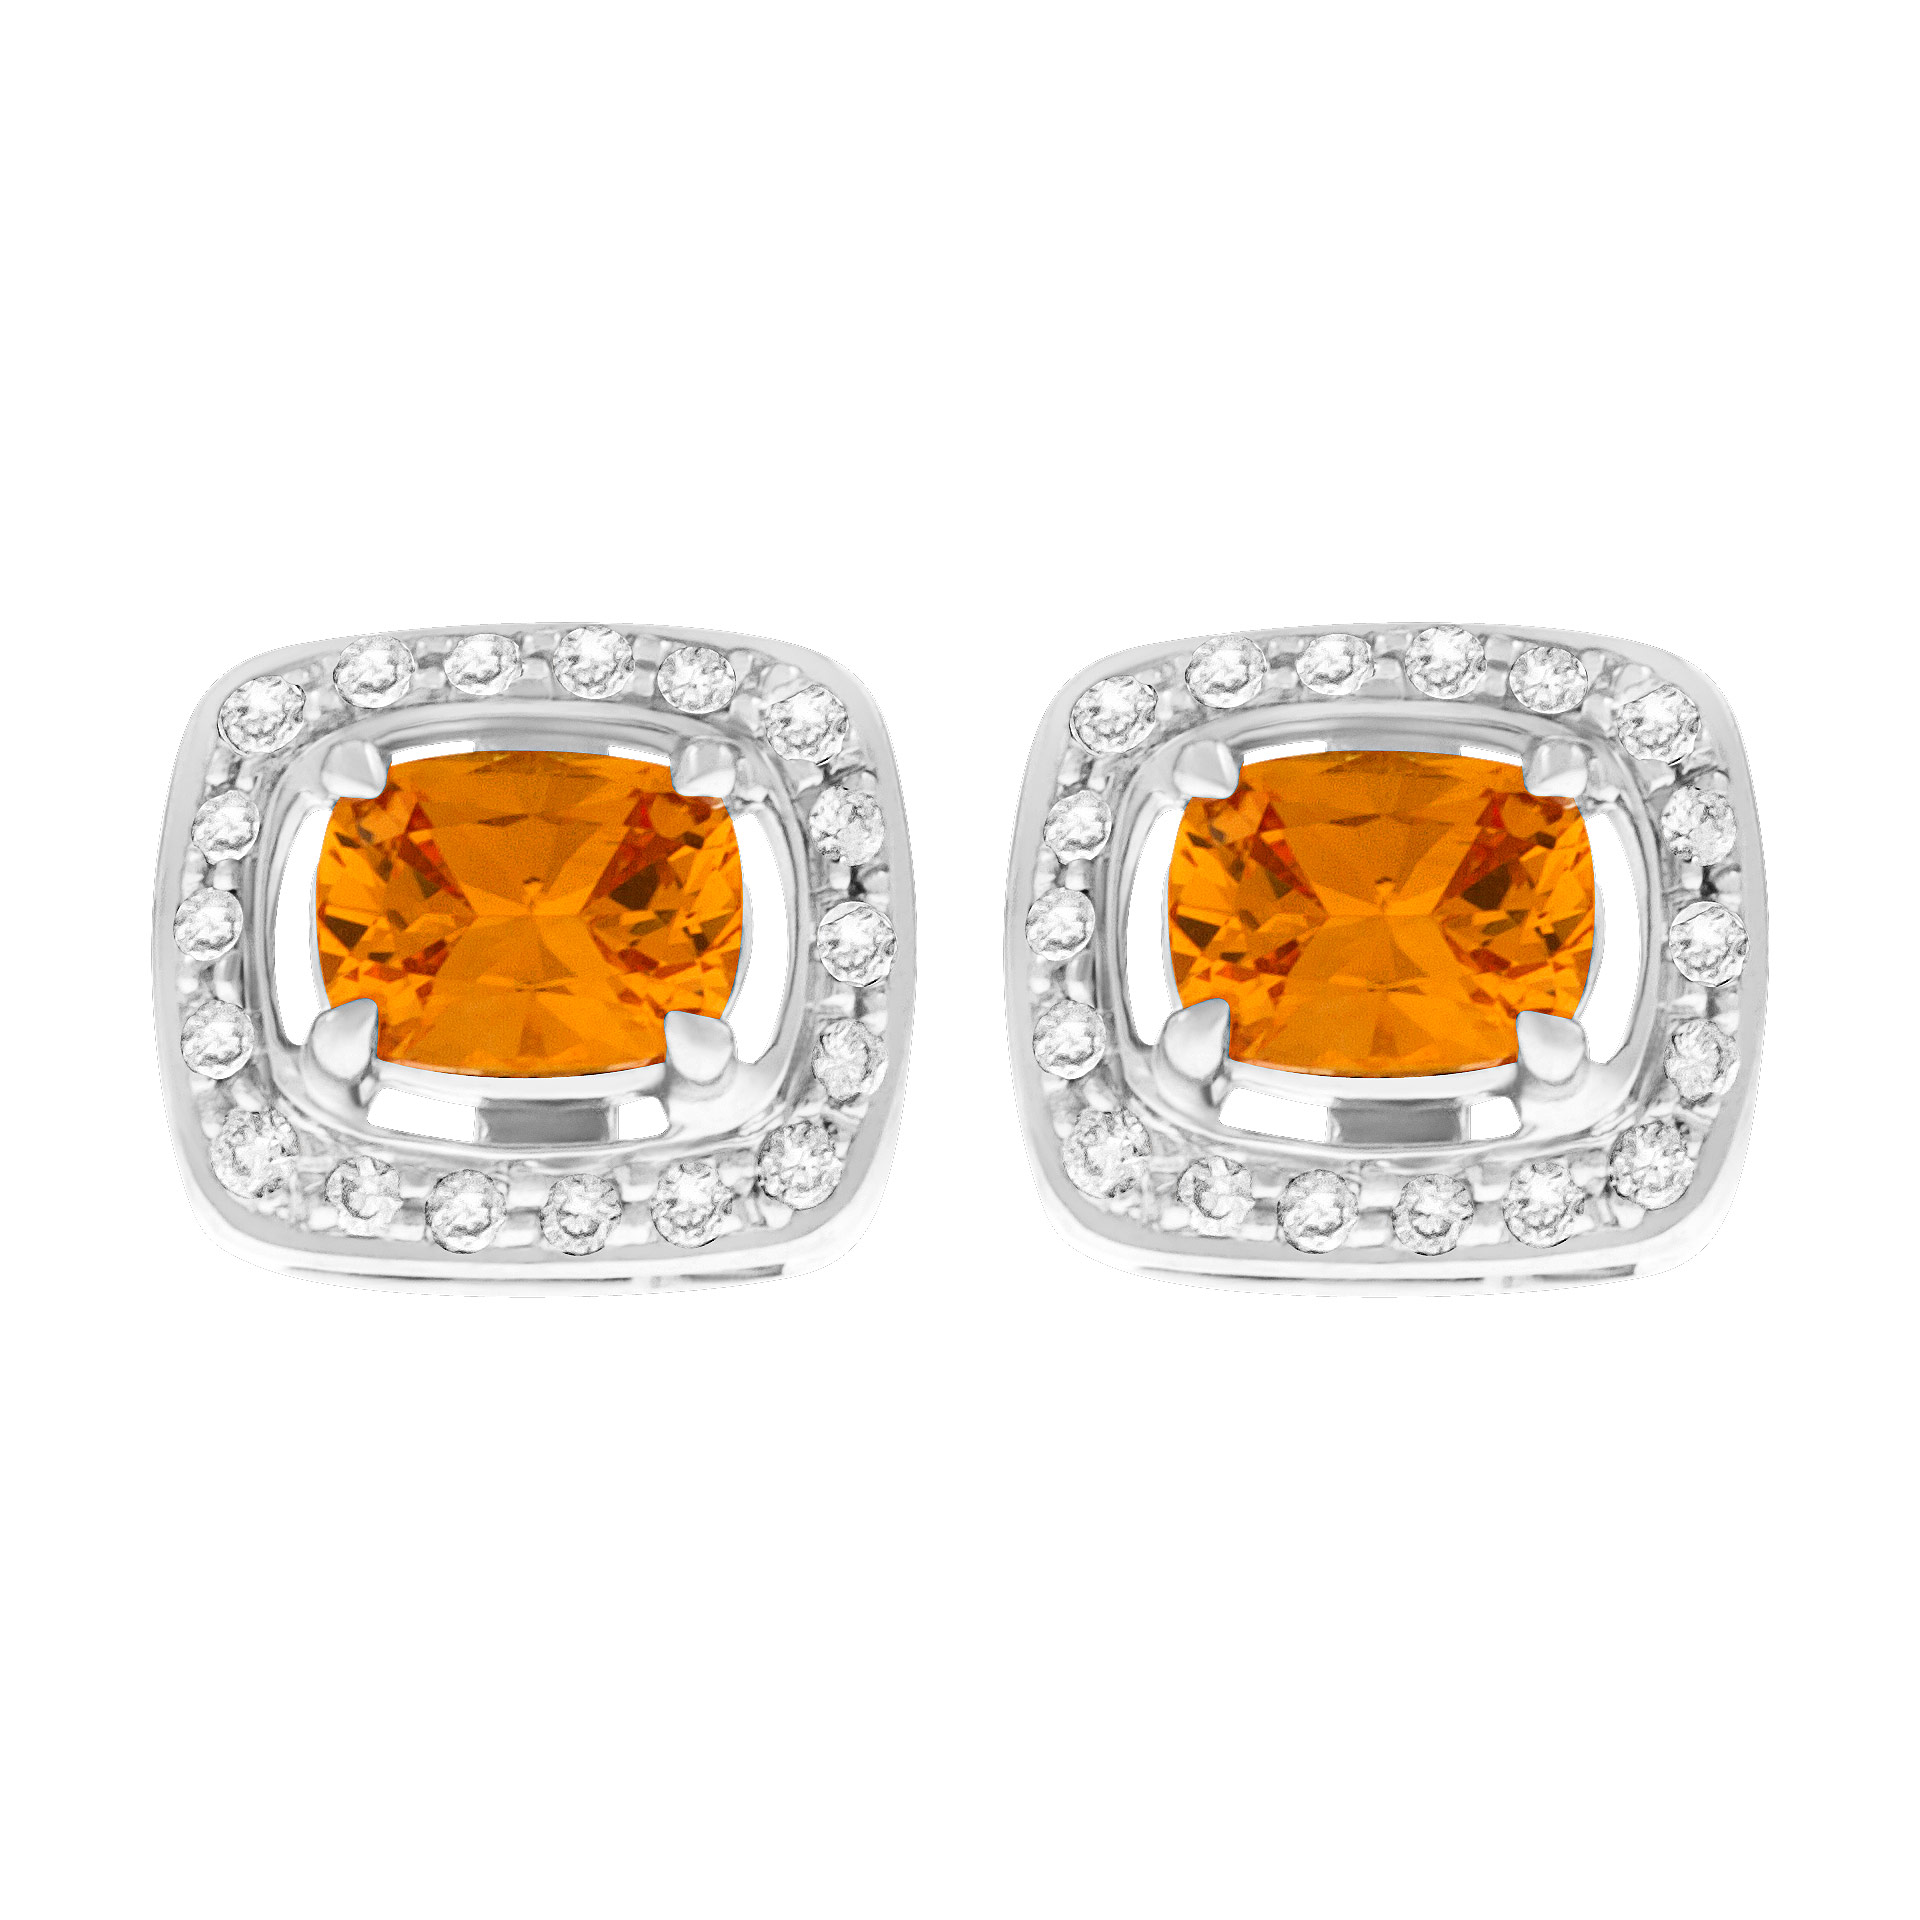 Orange sapphire studs with diamonds in 18k white gold